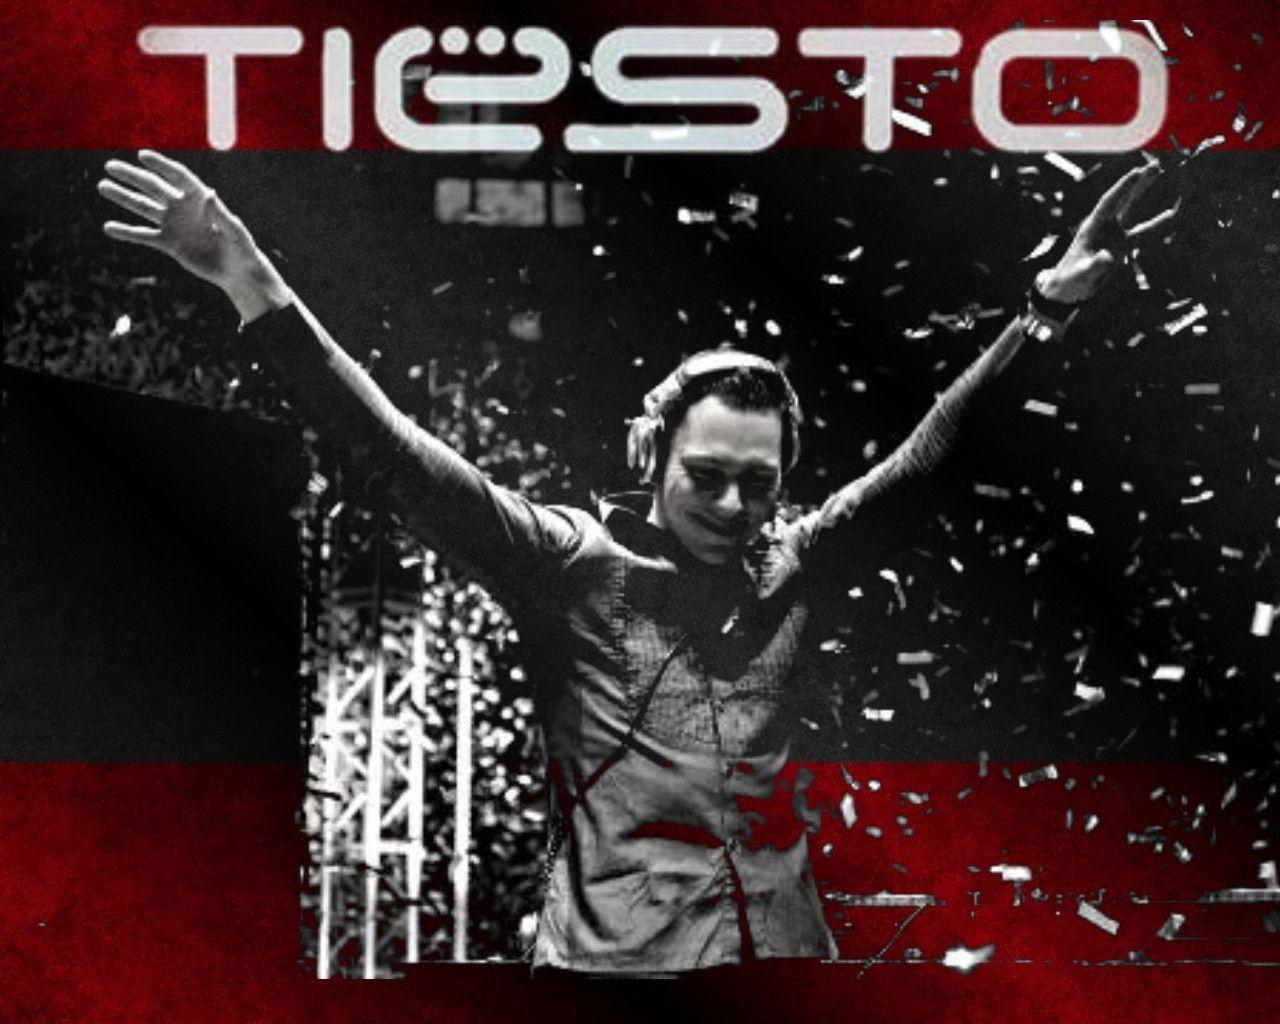 DJ Tiesto image tiesto HD wallpaper and background photo